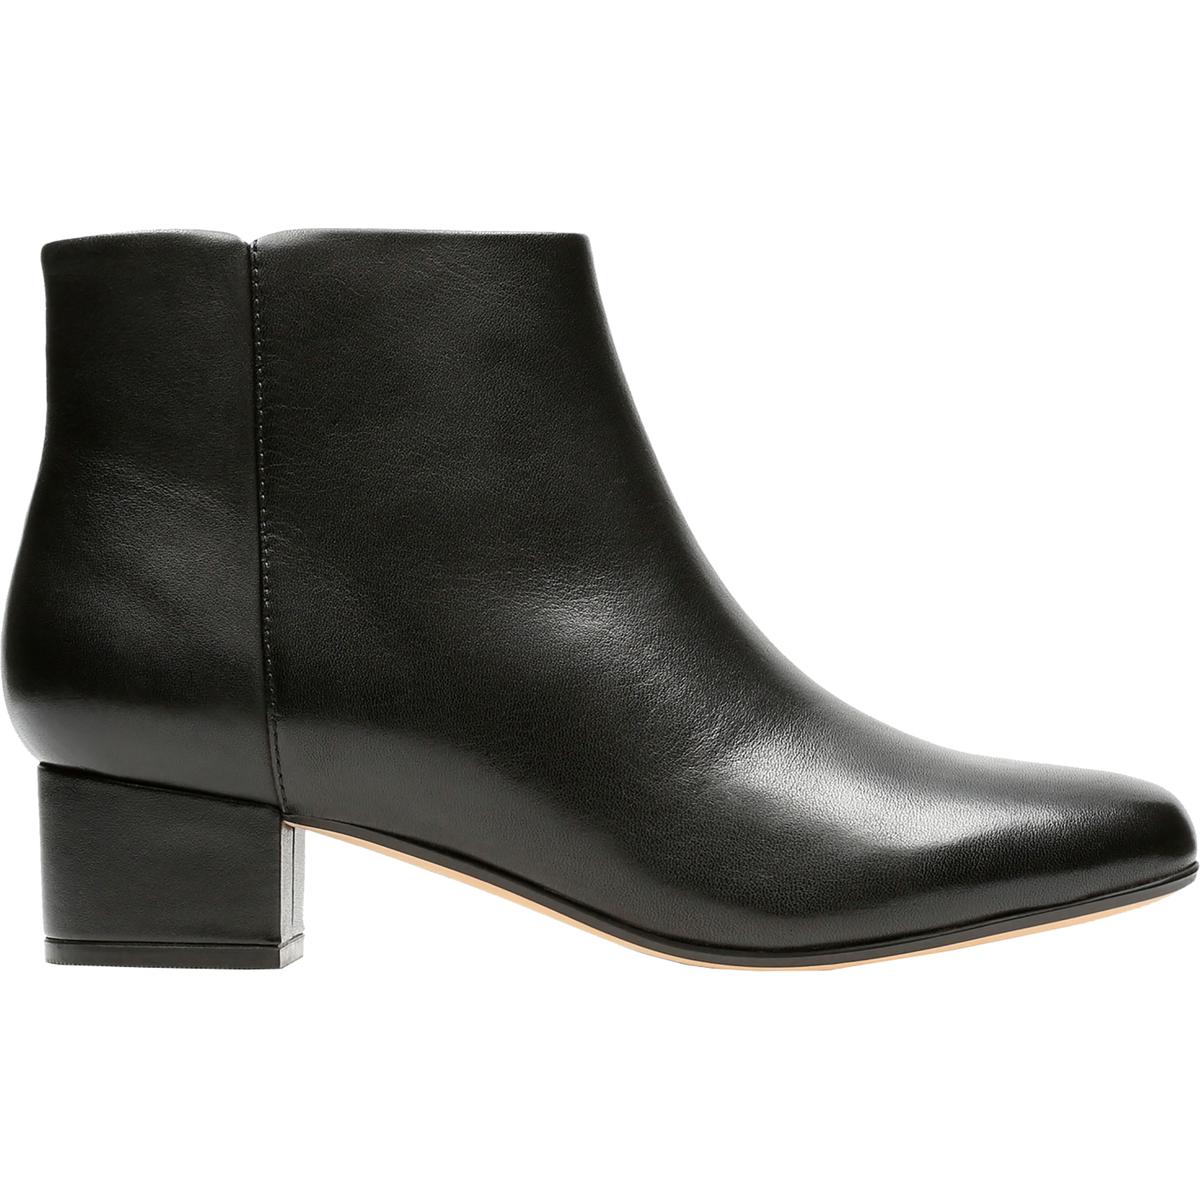 Clarks Womens Chartli Lilac Black Ankle Boots Shoes 8 Medium (B,M) BHFO ...